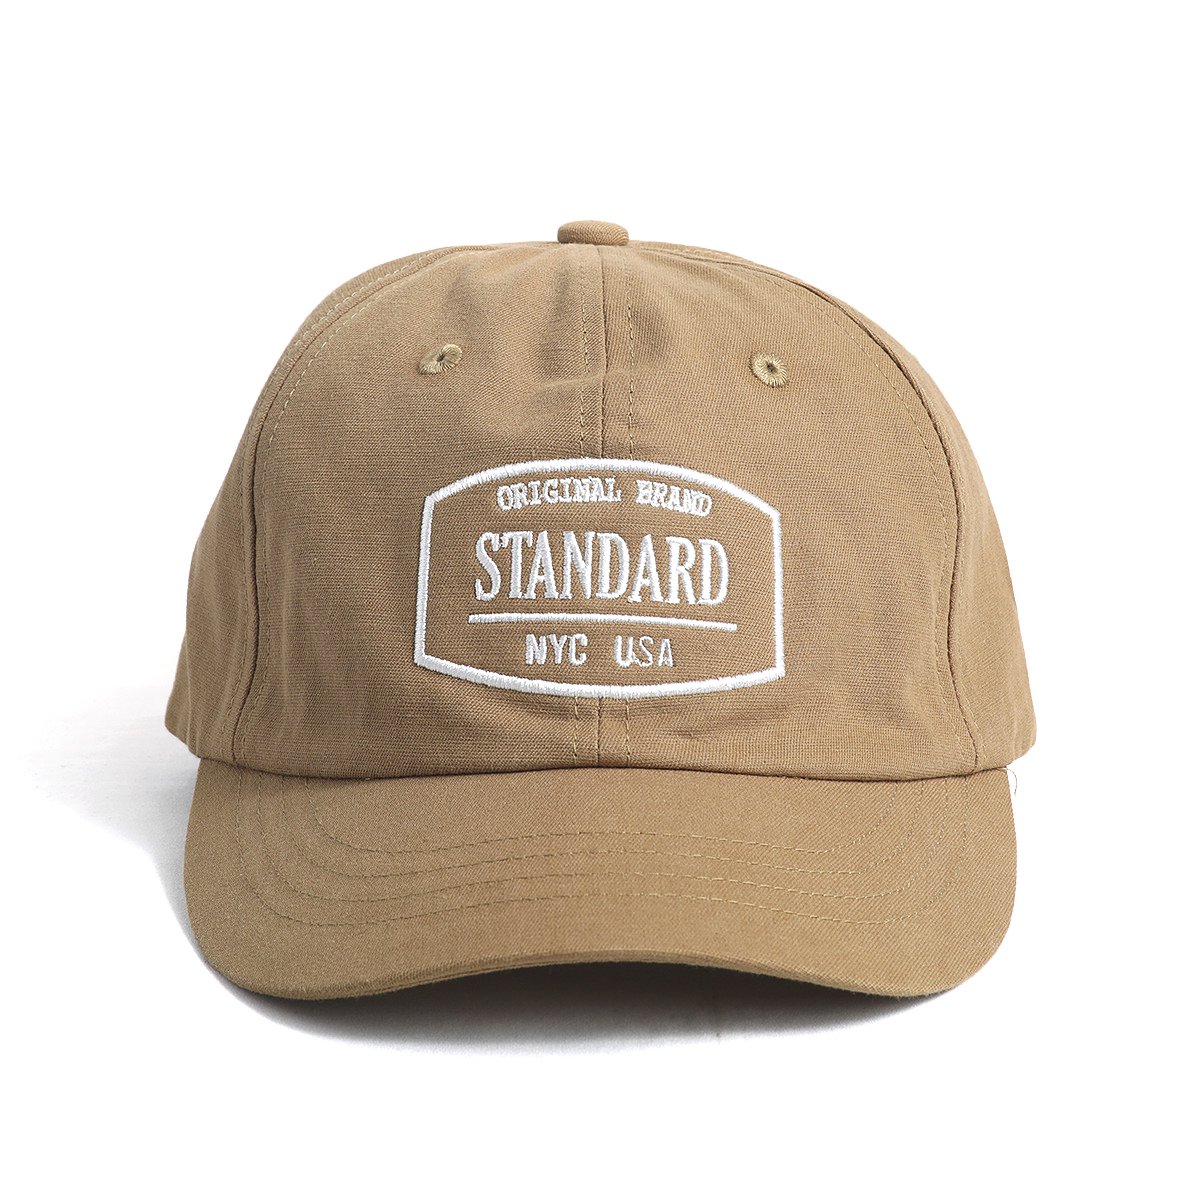 Standard Makes Cap